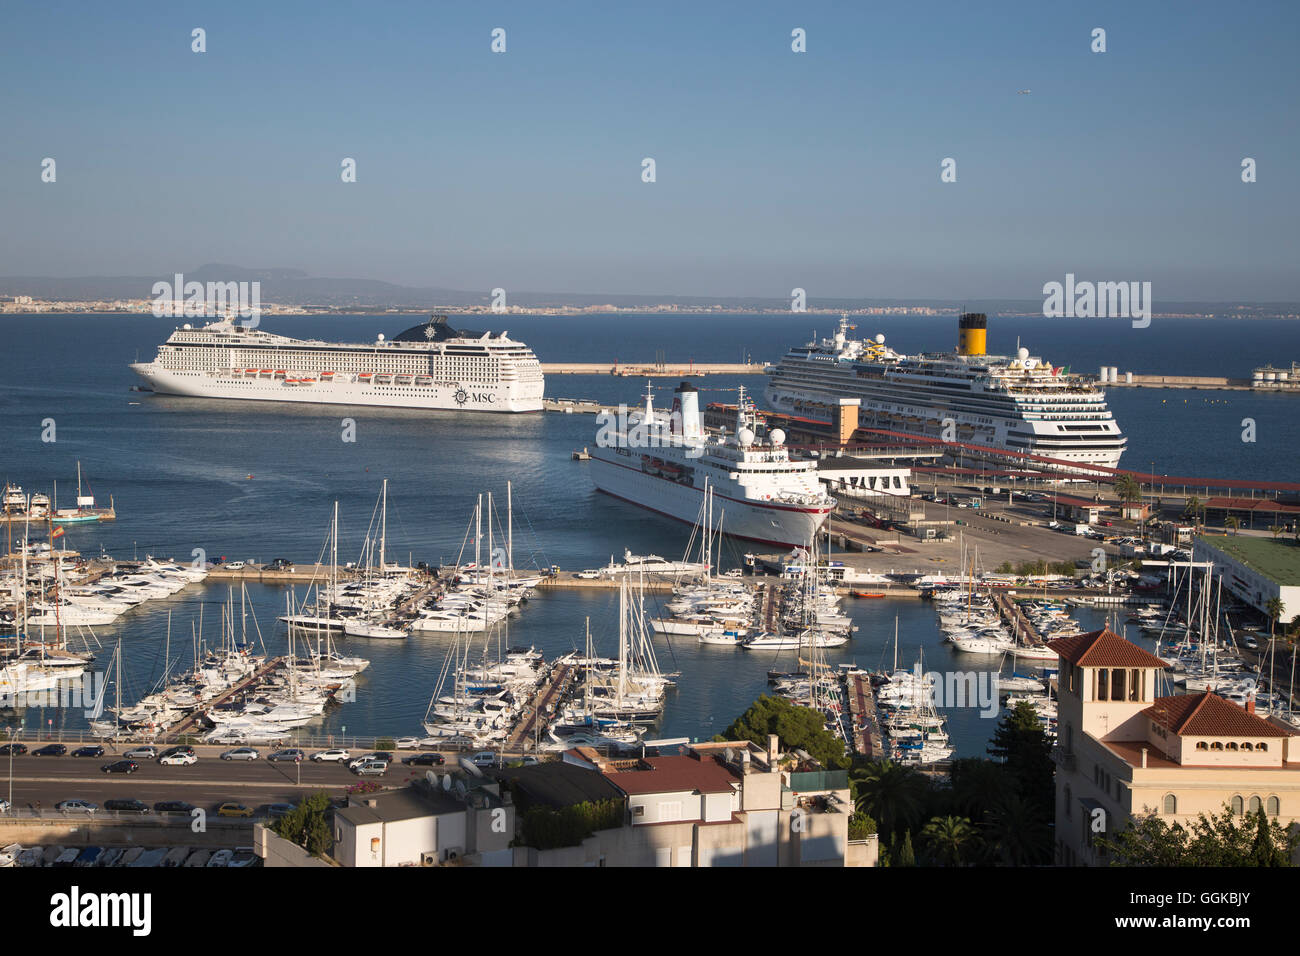 Cruceros MS Deutschland (Peter Deilmann Reederei), MSC Musica (MSC Cruceros) y Costa Favolosa (Costa Crociere) en Palma Cru Foto de stock